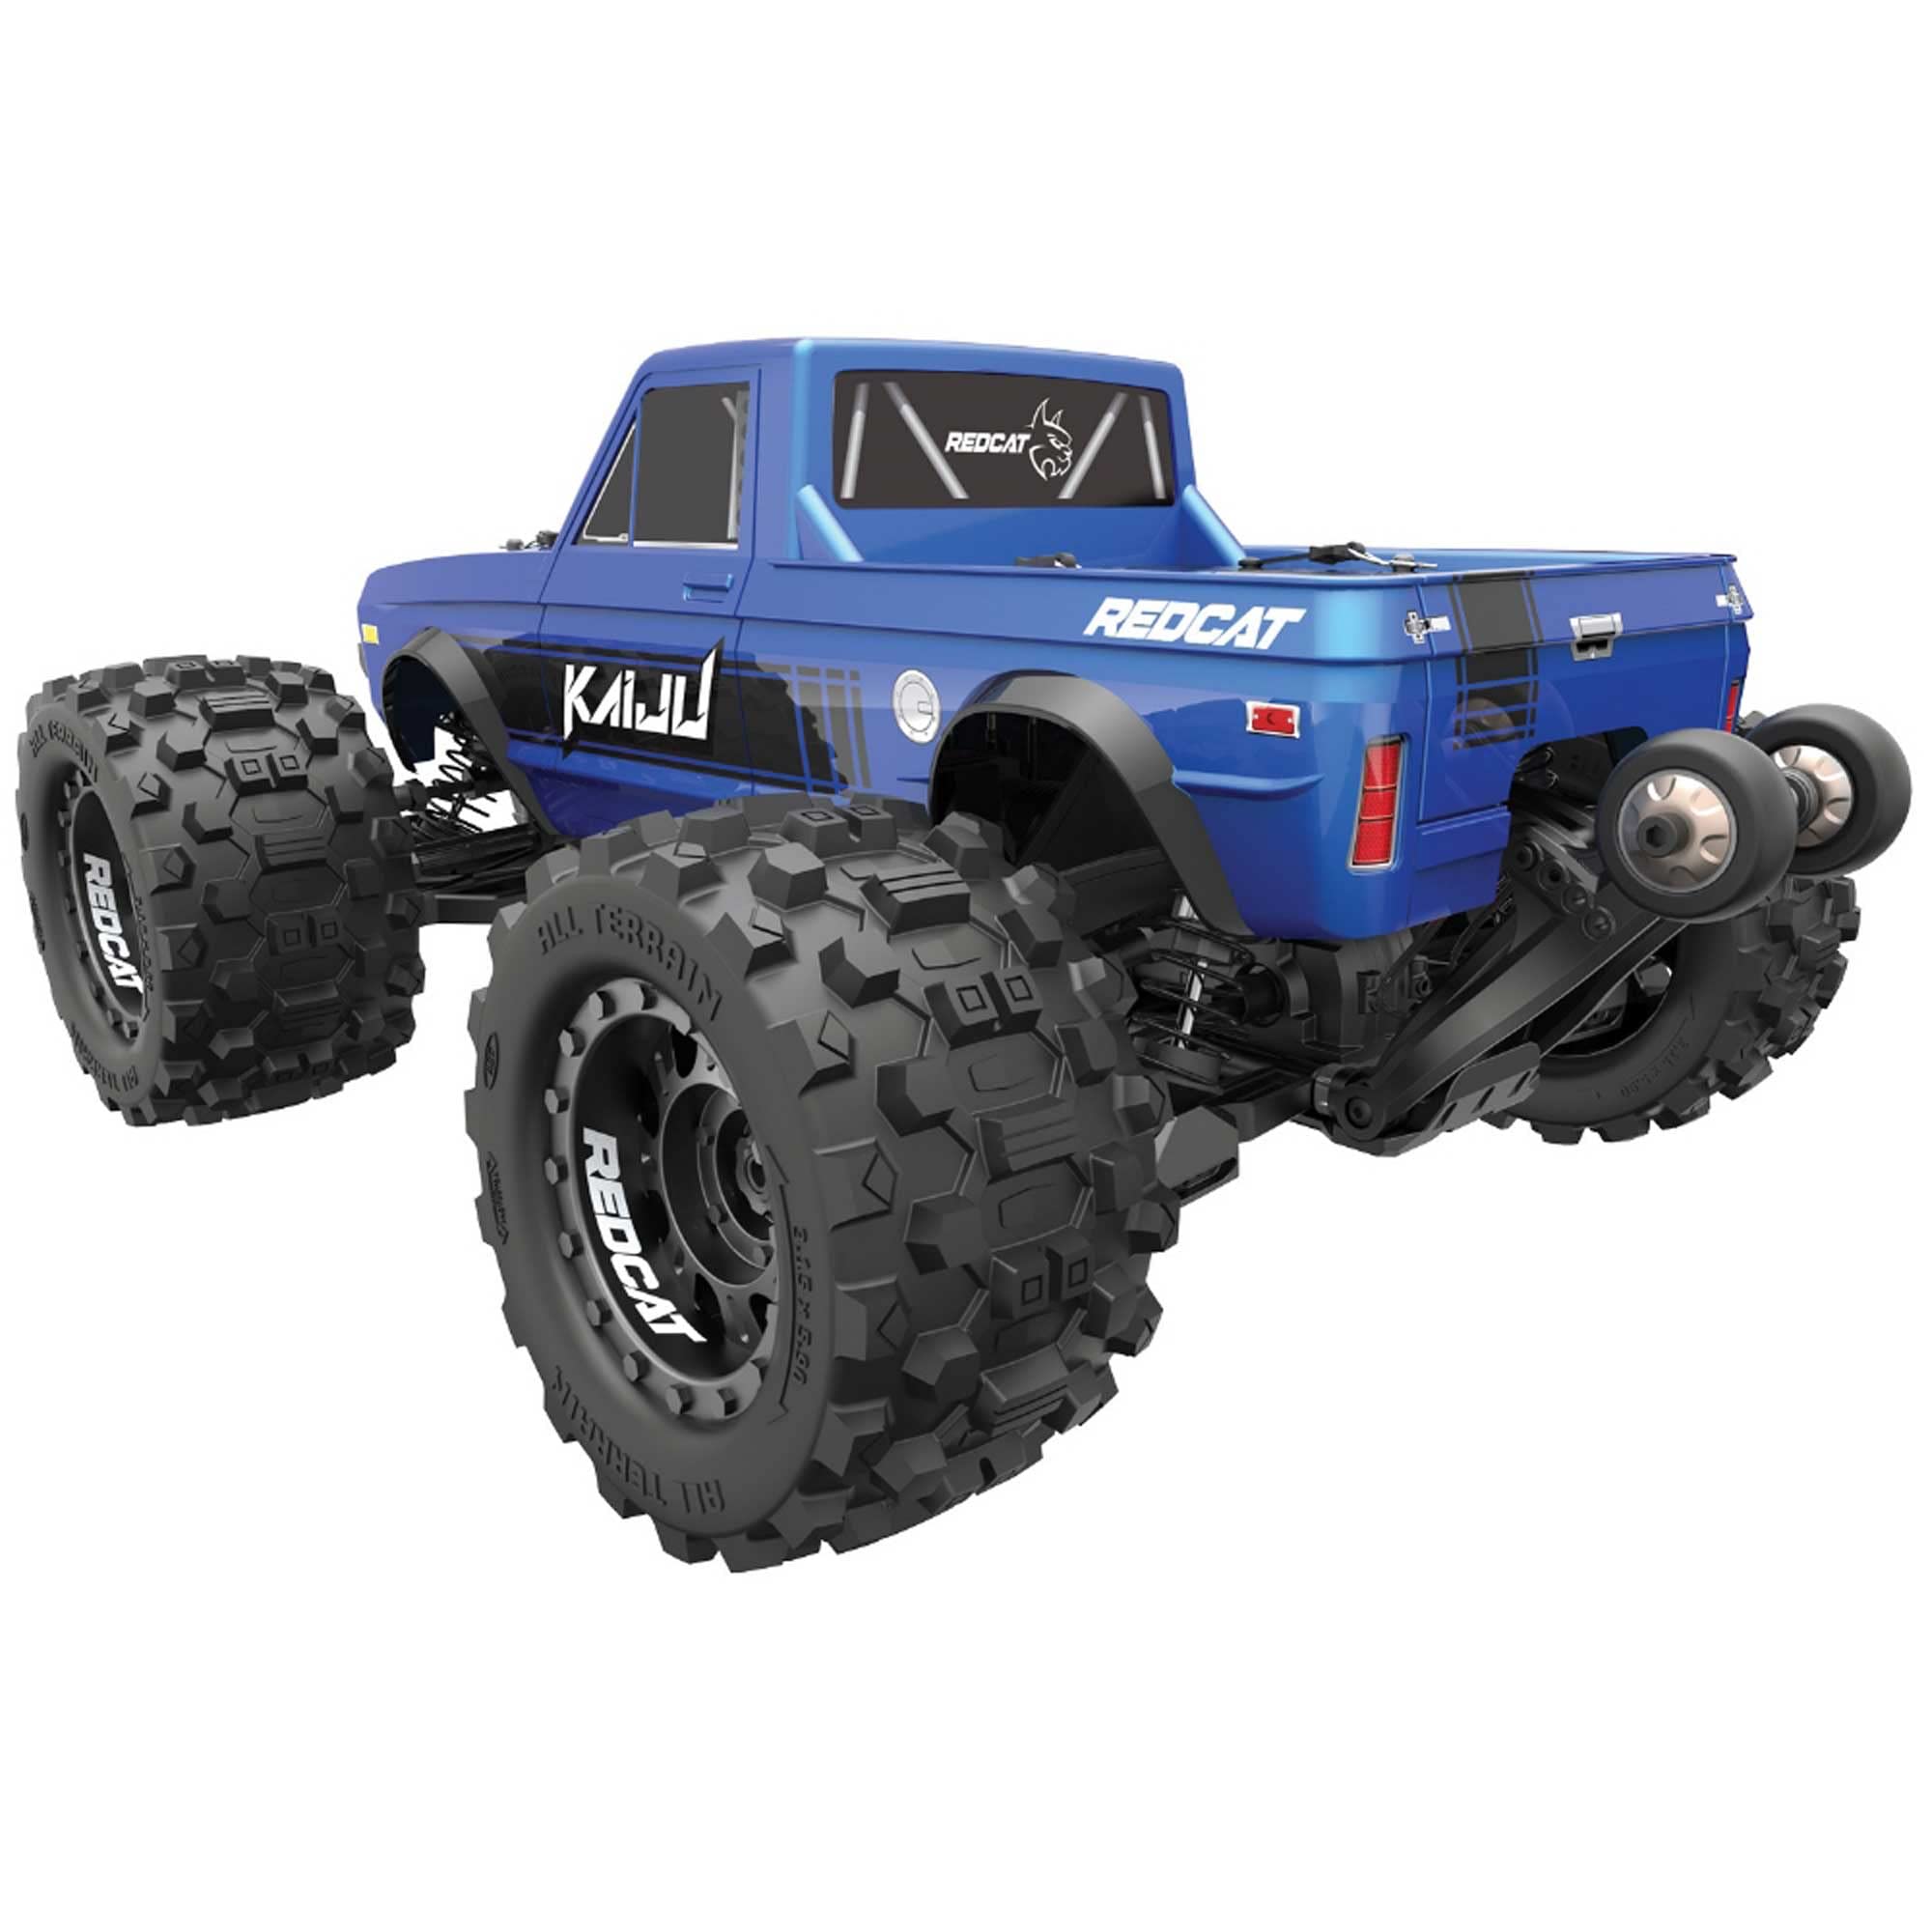 Redcat Racing Kaiju - 1:8 Scale Monster Truck – RTR- 6S Ready, Blue (Kaiju-Blue)